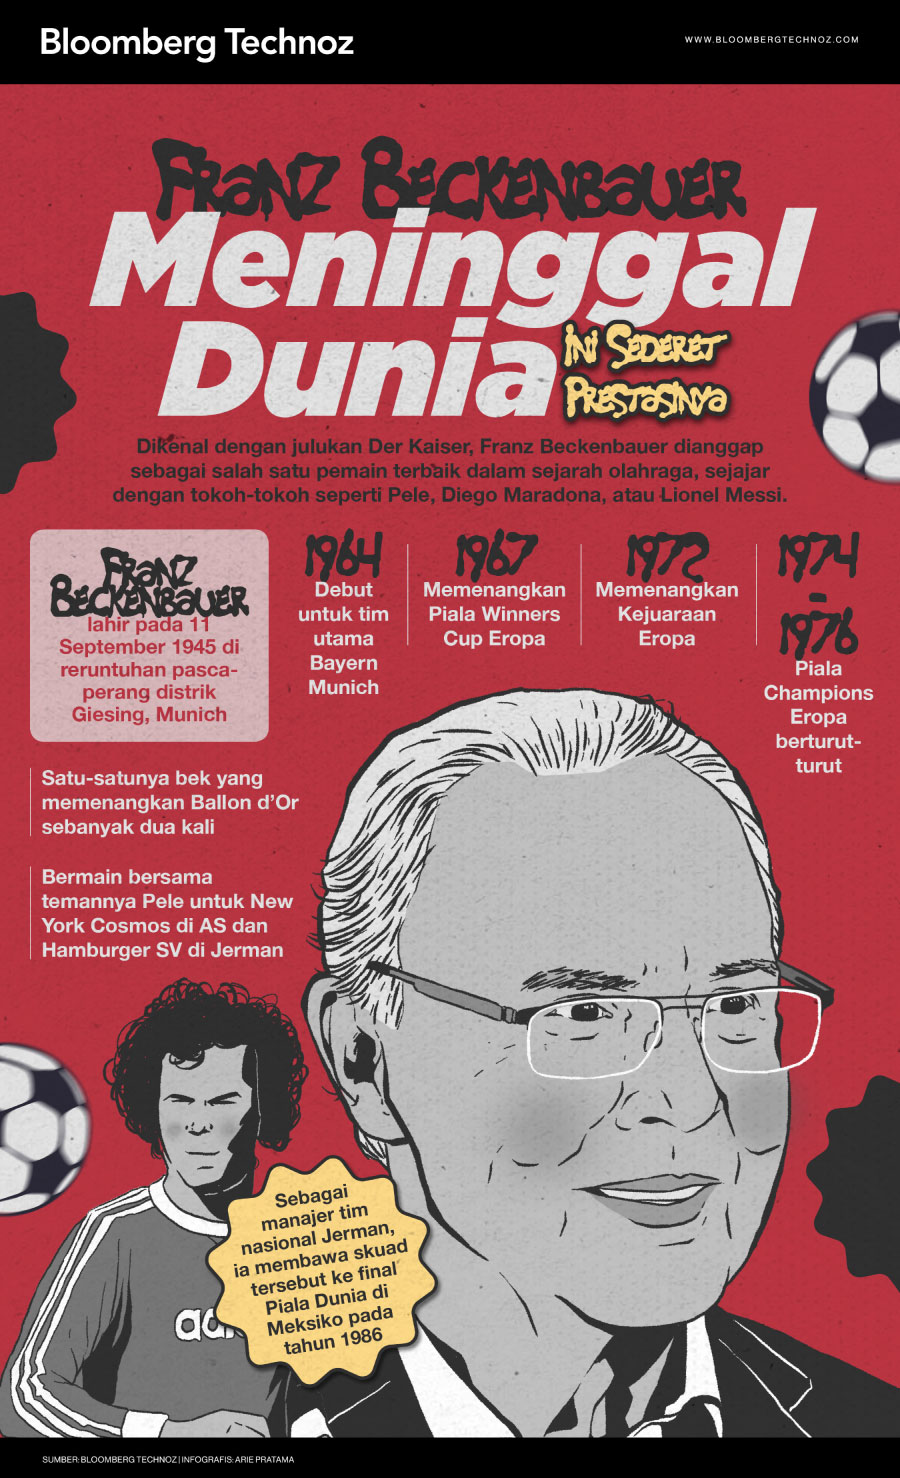 Infografis Franz Beckenbauer Meninggal Dunia, Ini Sederet Prestasinya (Arie Pratama/Bloomberg Technoz)